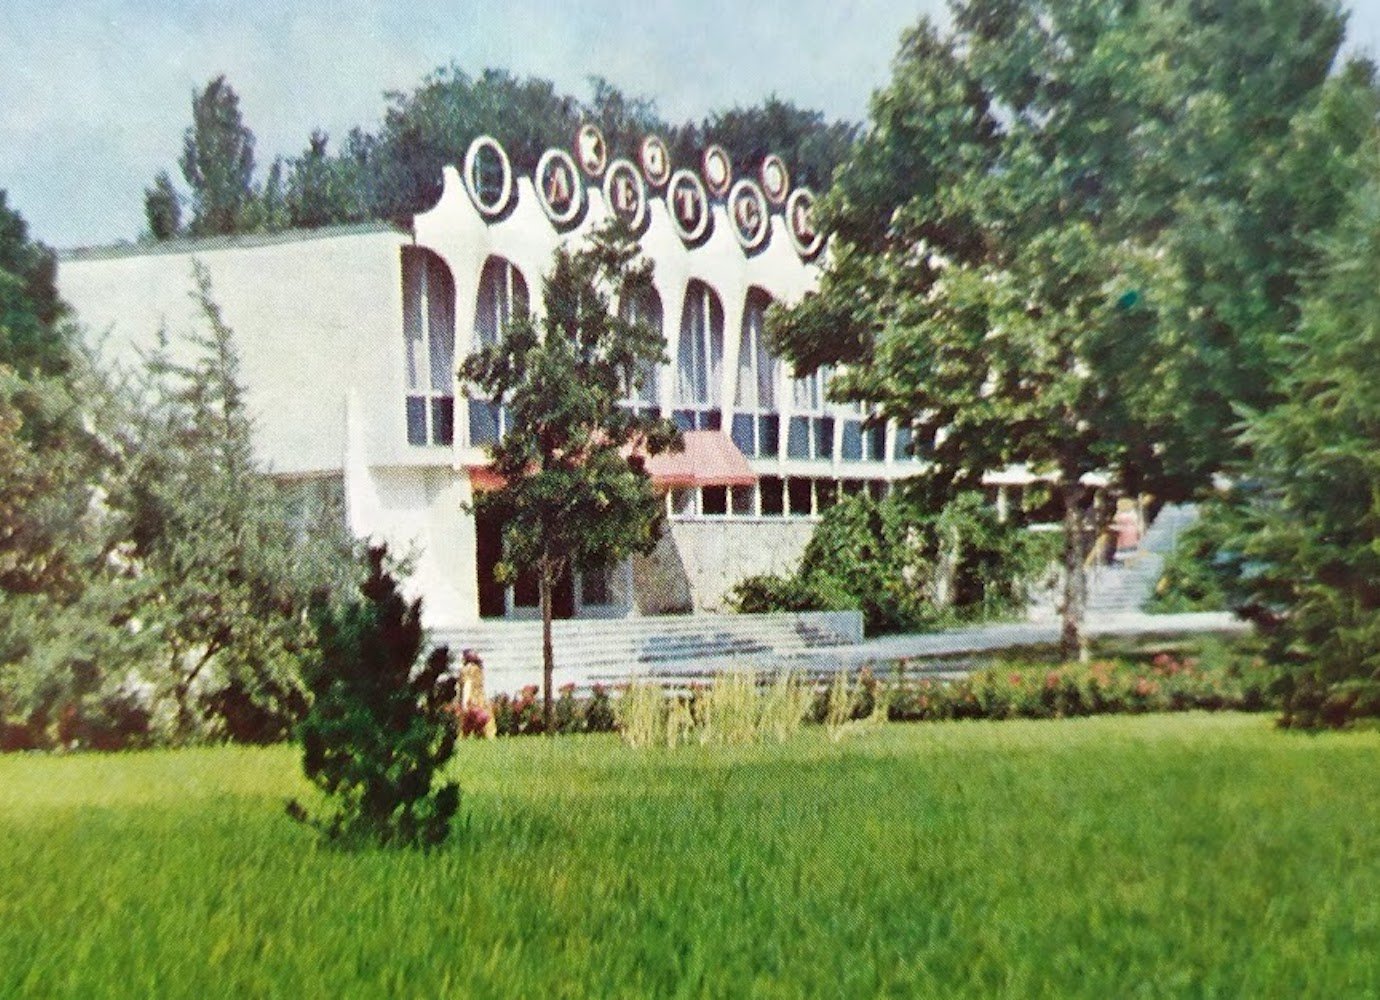 Moldova’s emblematic socialist modernist National Hotel risks demolition | Concrete Ideas